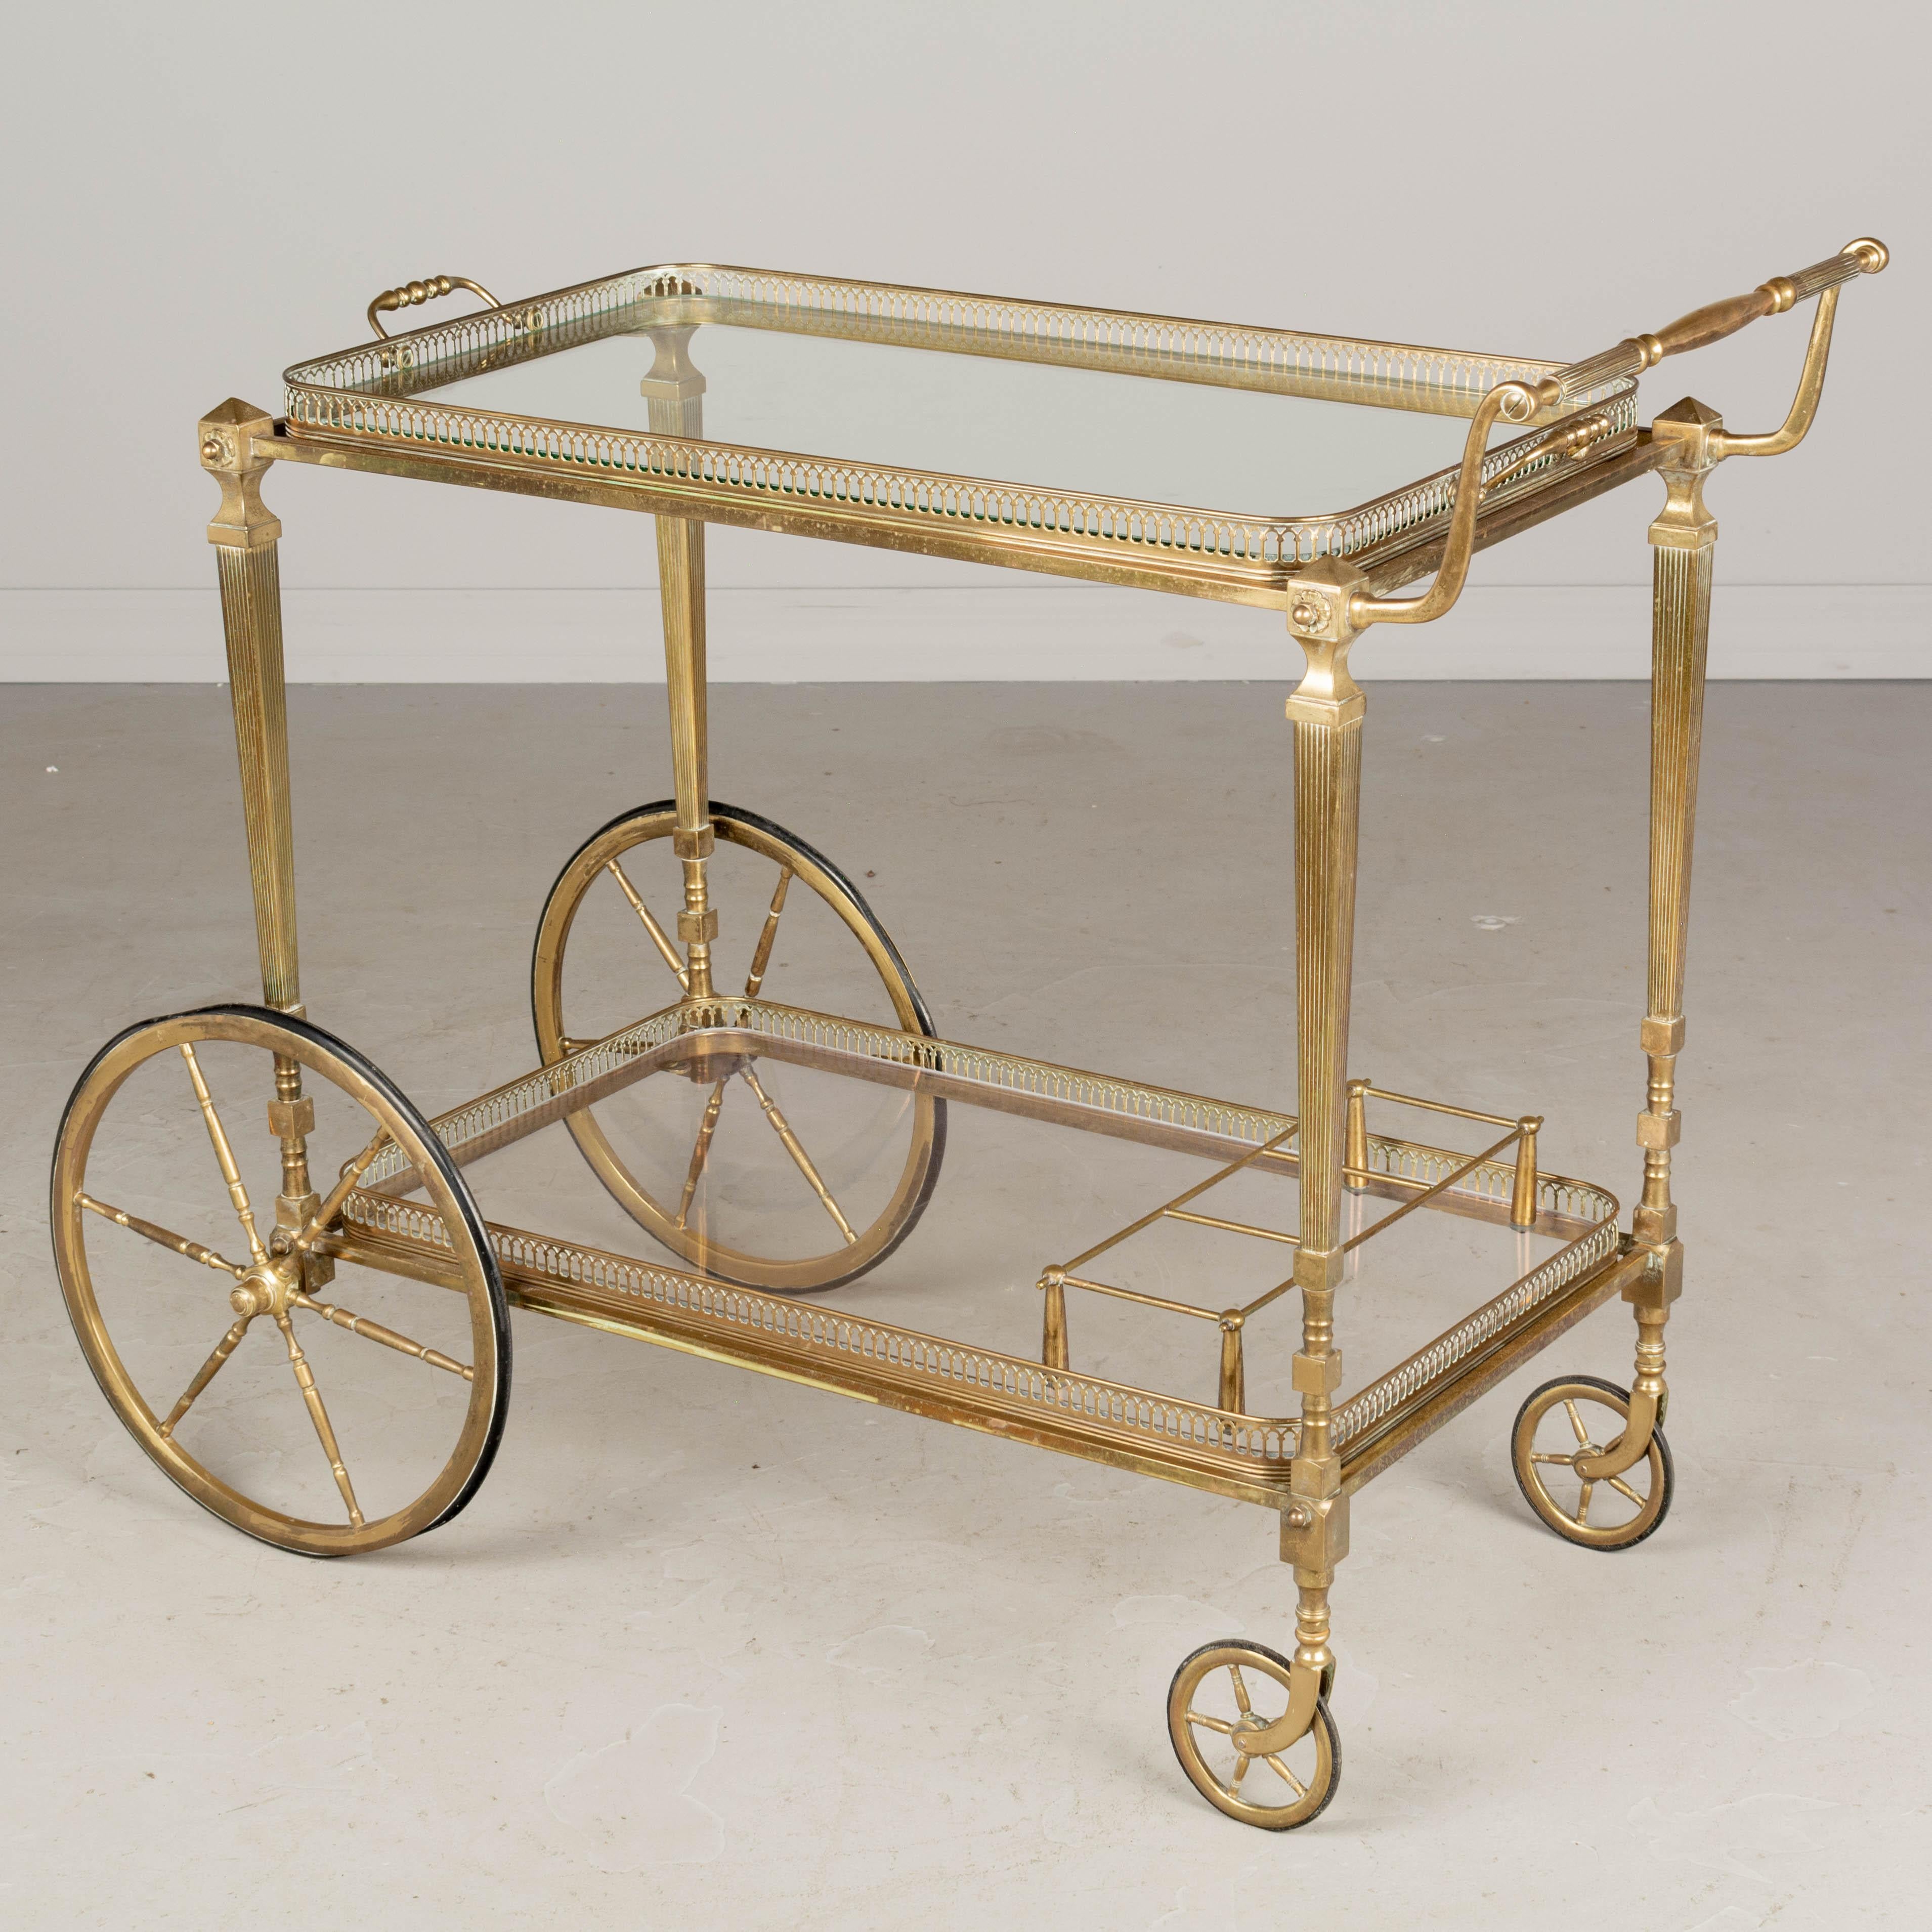 Cast Midcentury French Brass Bar Cart